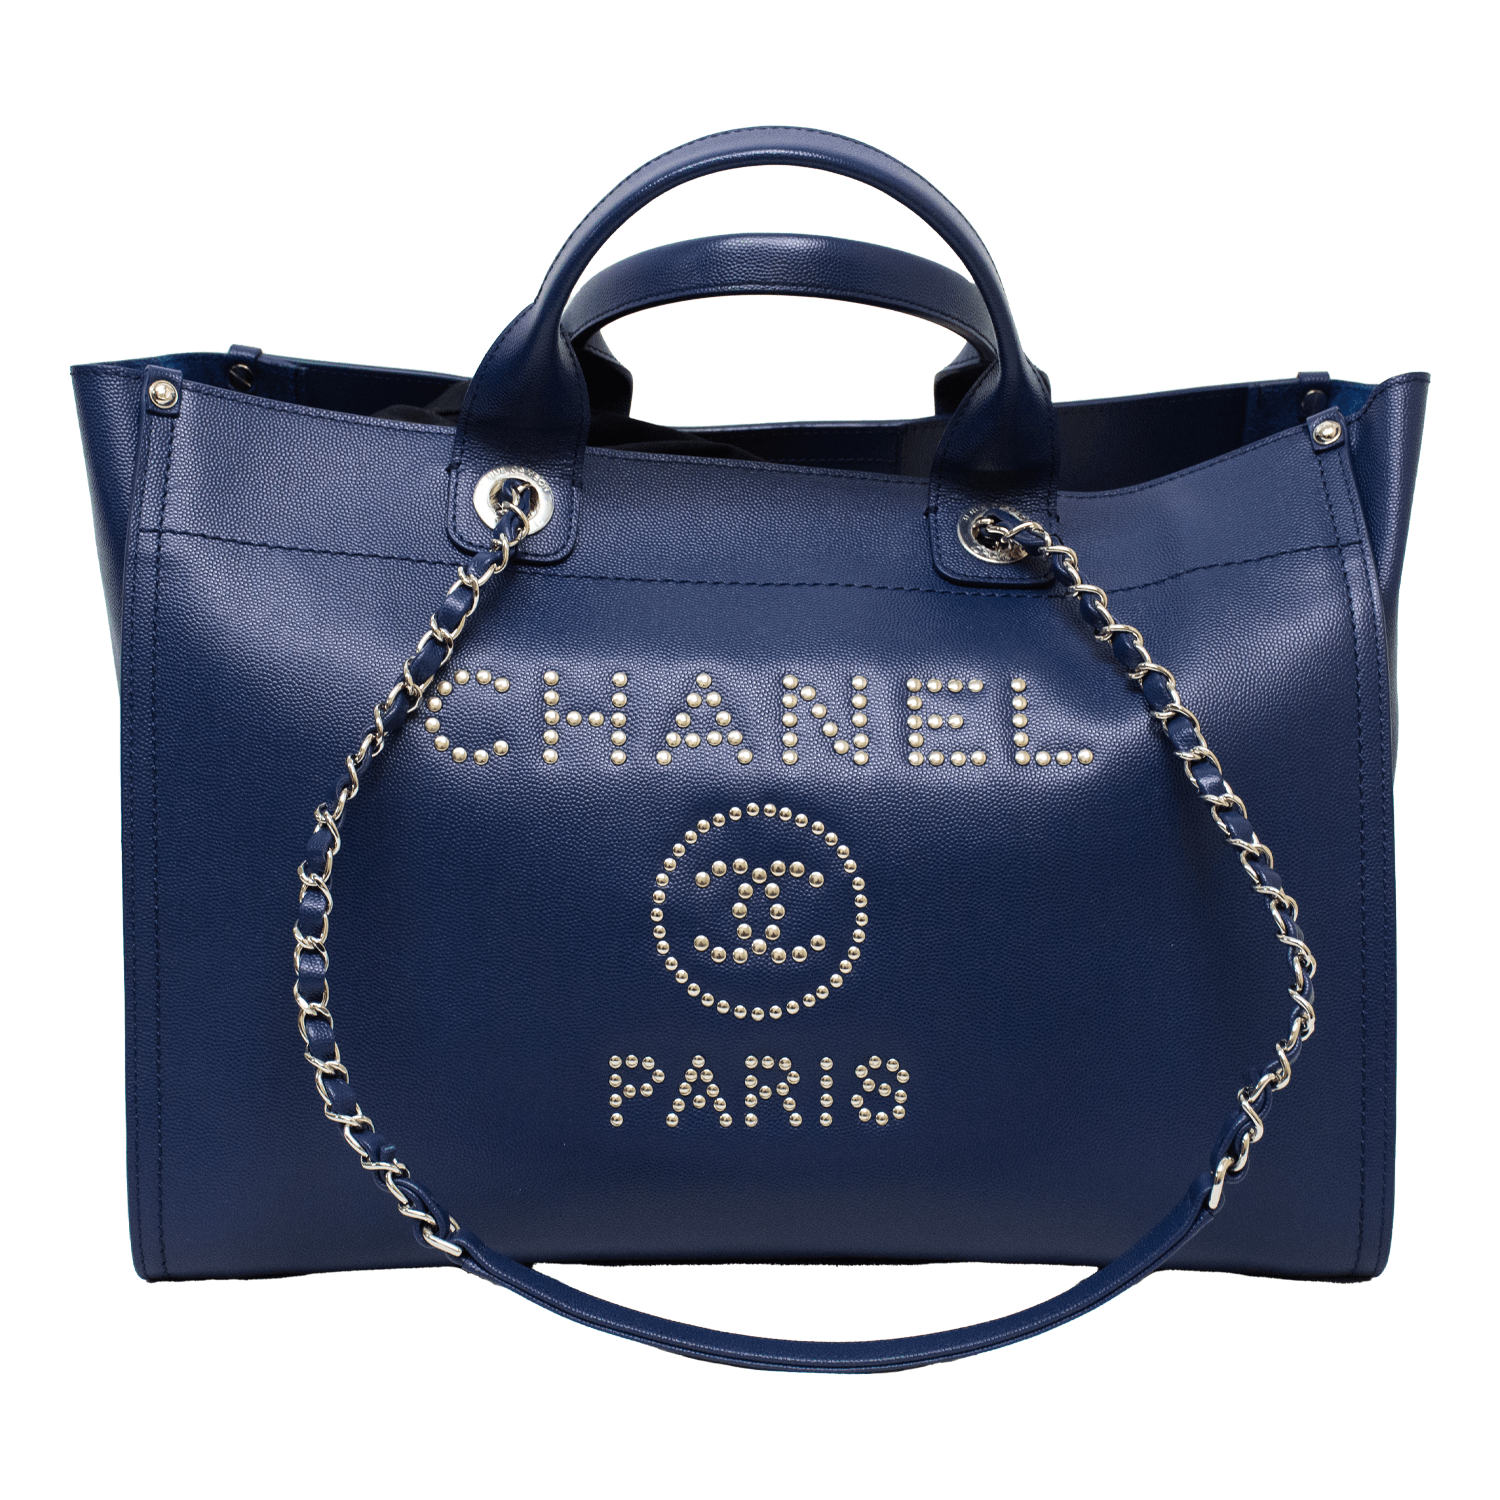 Chanel Studded Deauville Navy Large Handbag - ipawnishop.com